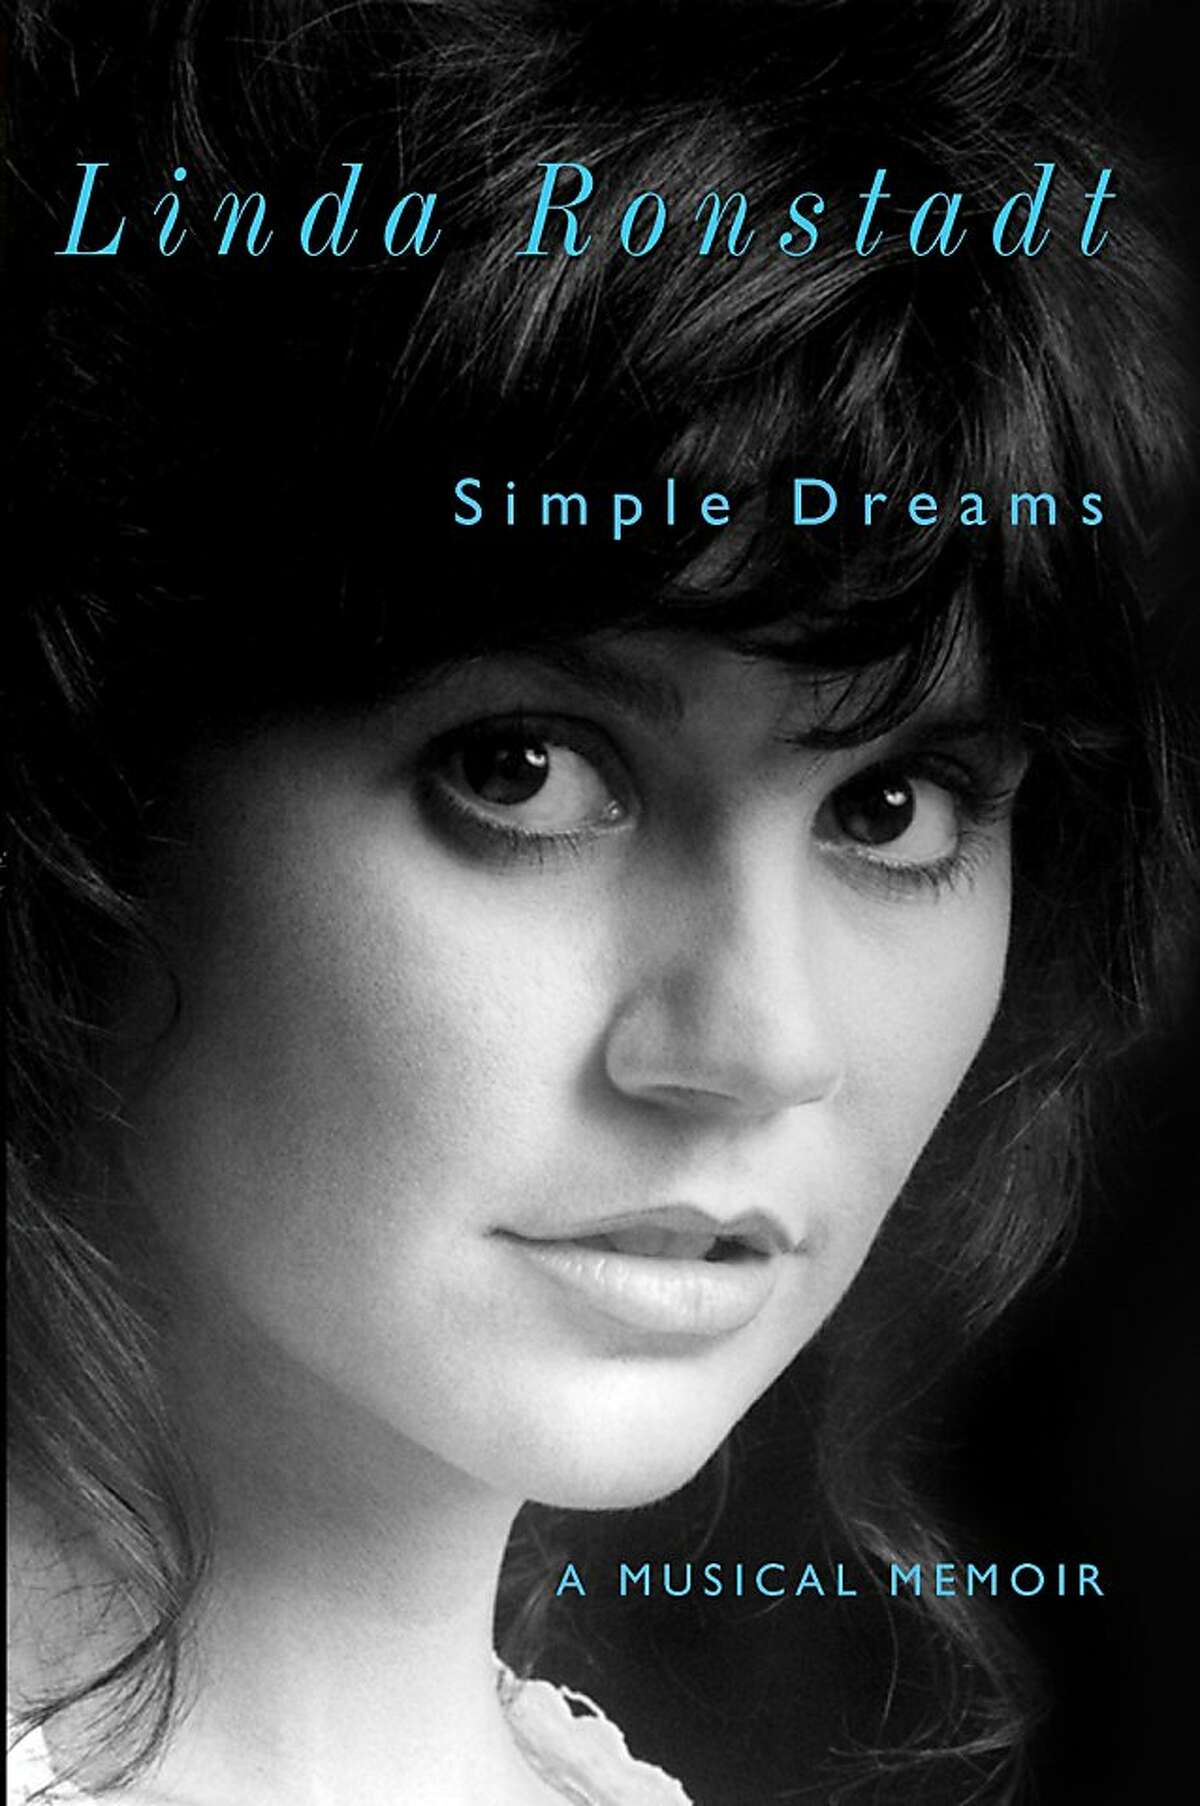 Simple Dreams: A Musical Memoir, by Linda Ronstadt